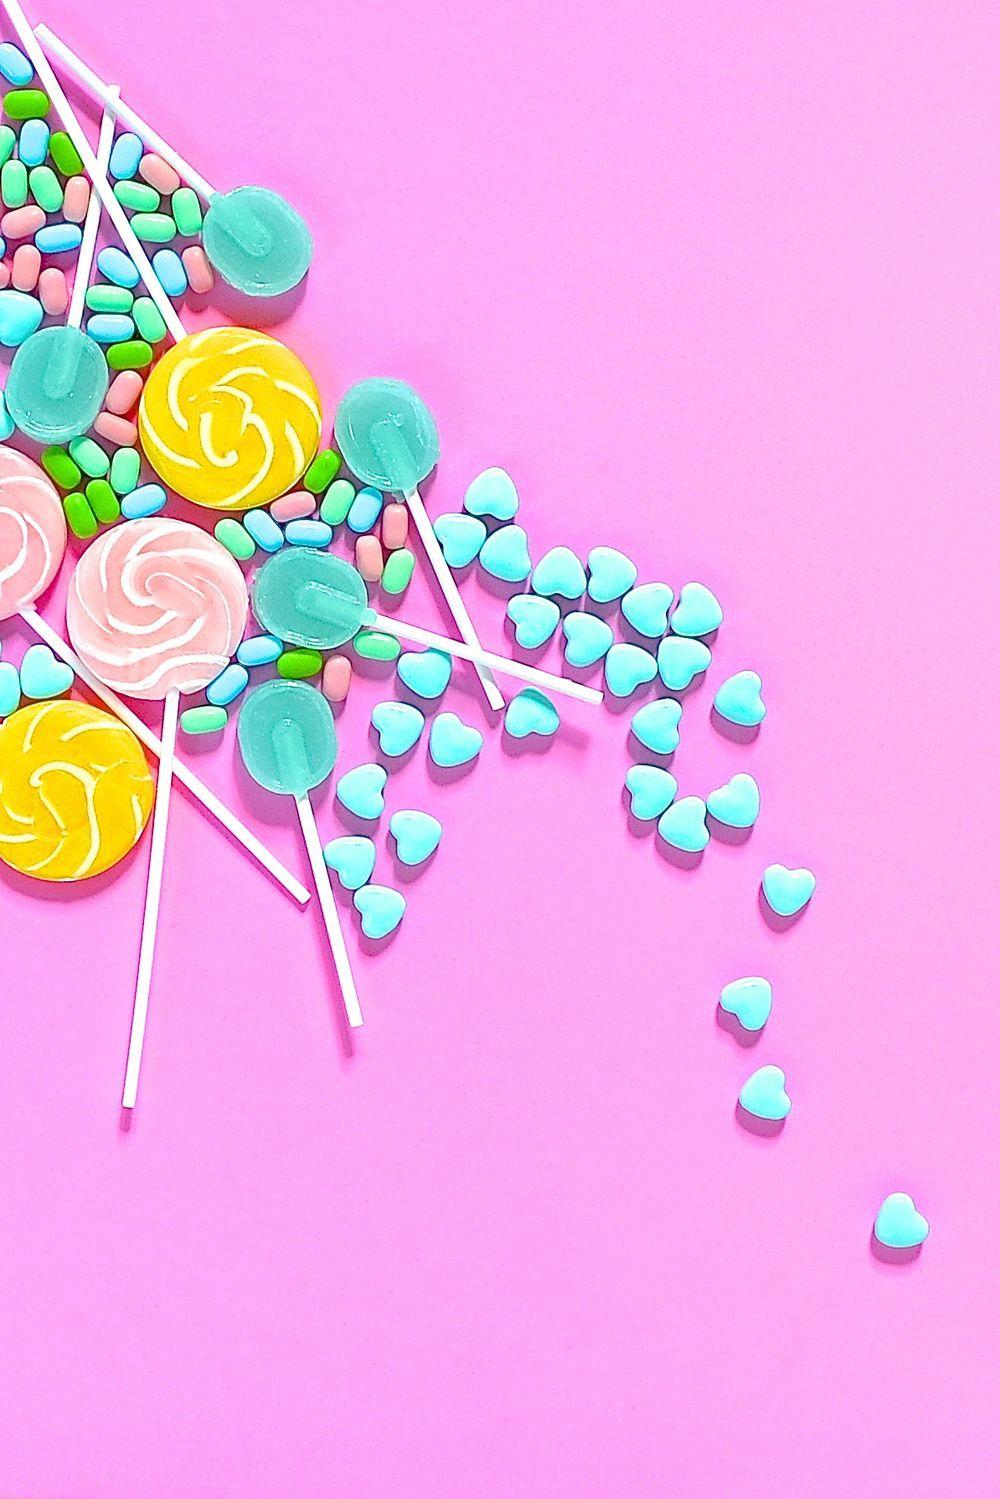 Sweet As Sugar- Wallpaper Download. Violet Tinder Studios